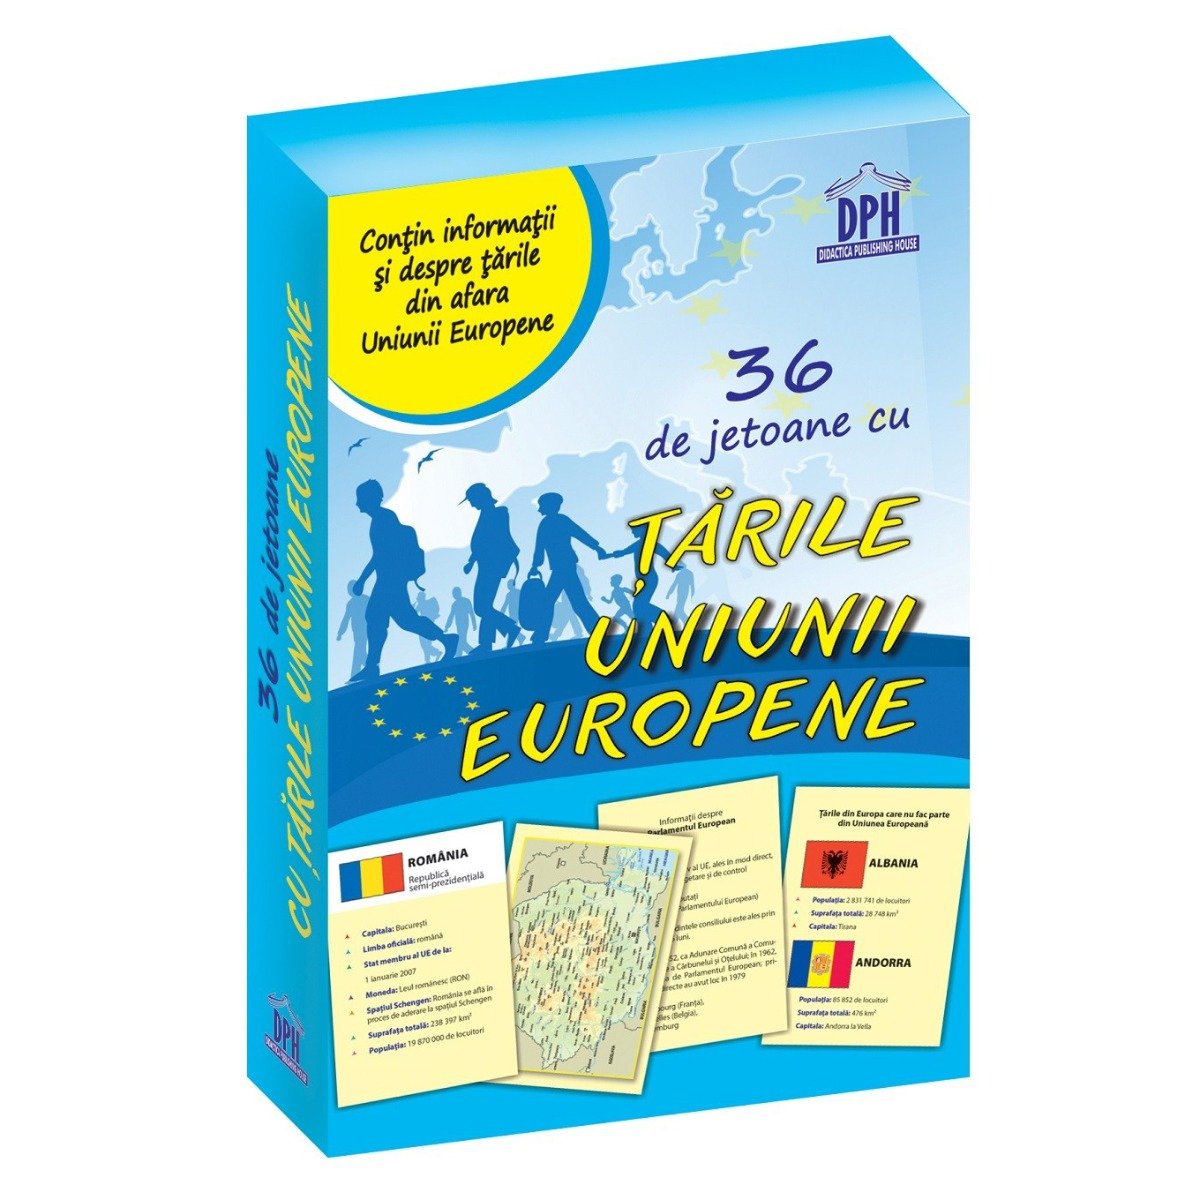 36 de jetoane cu tarile Uniunii Europene, Editura DPH